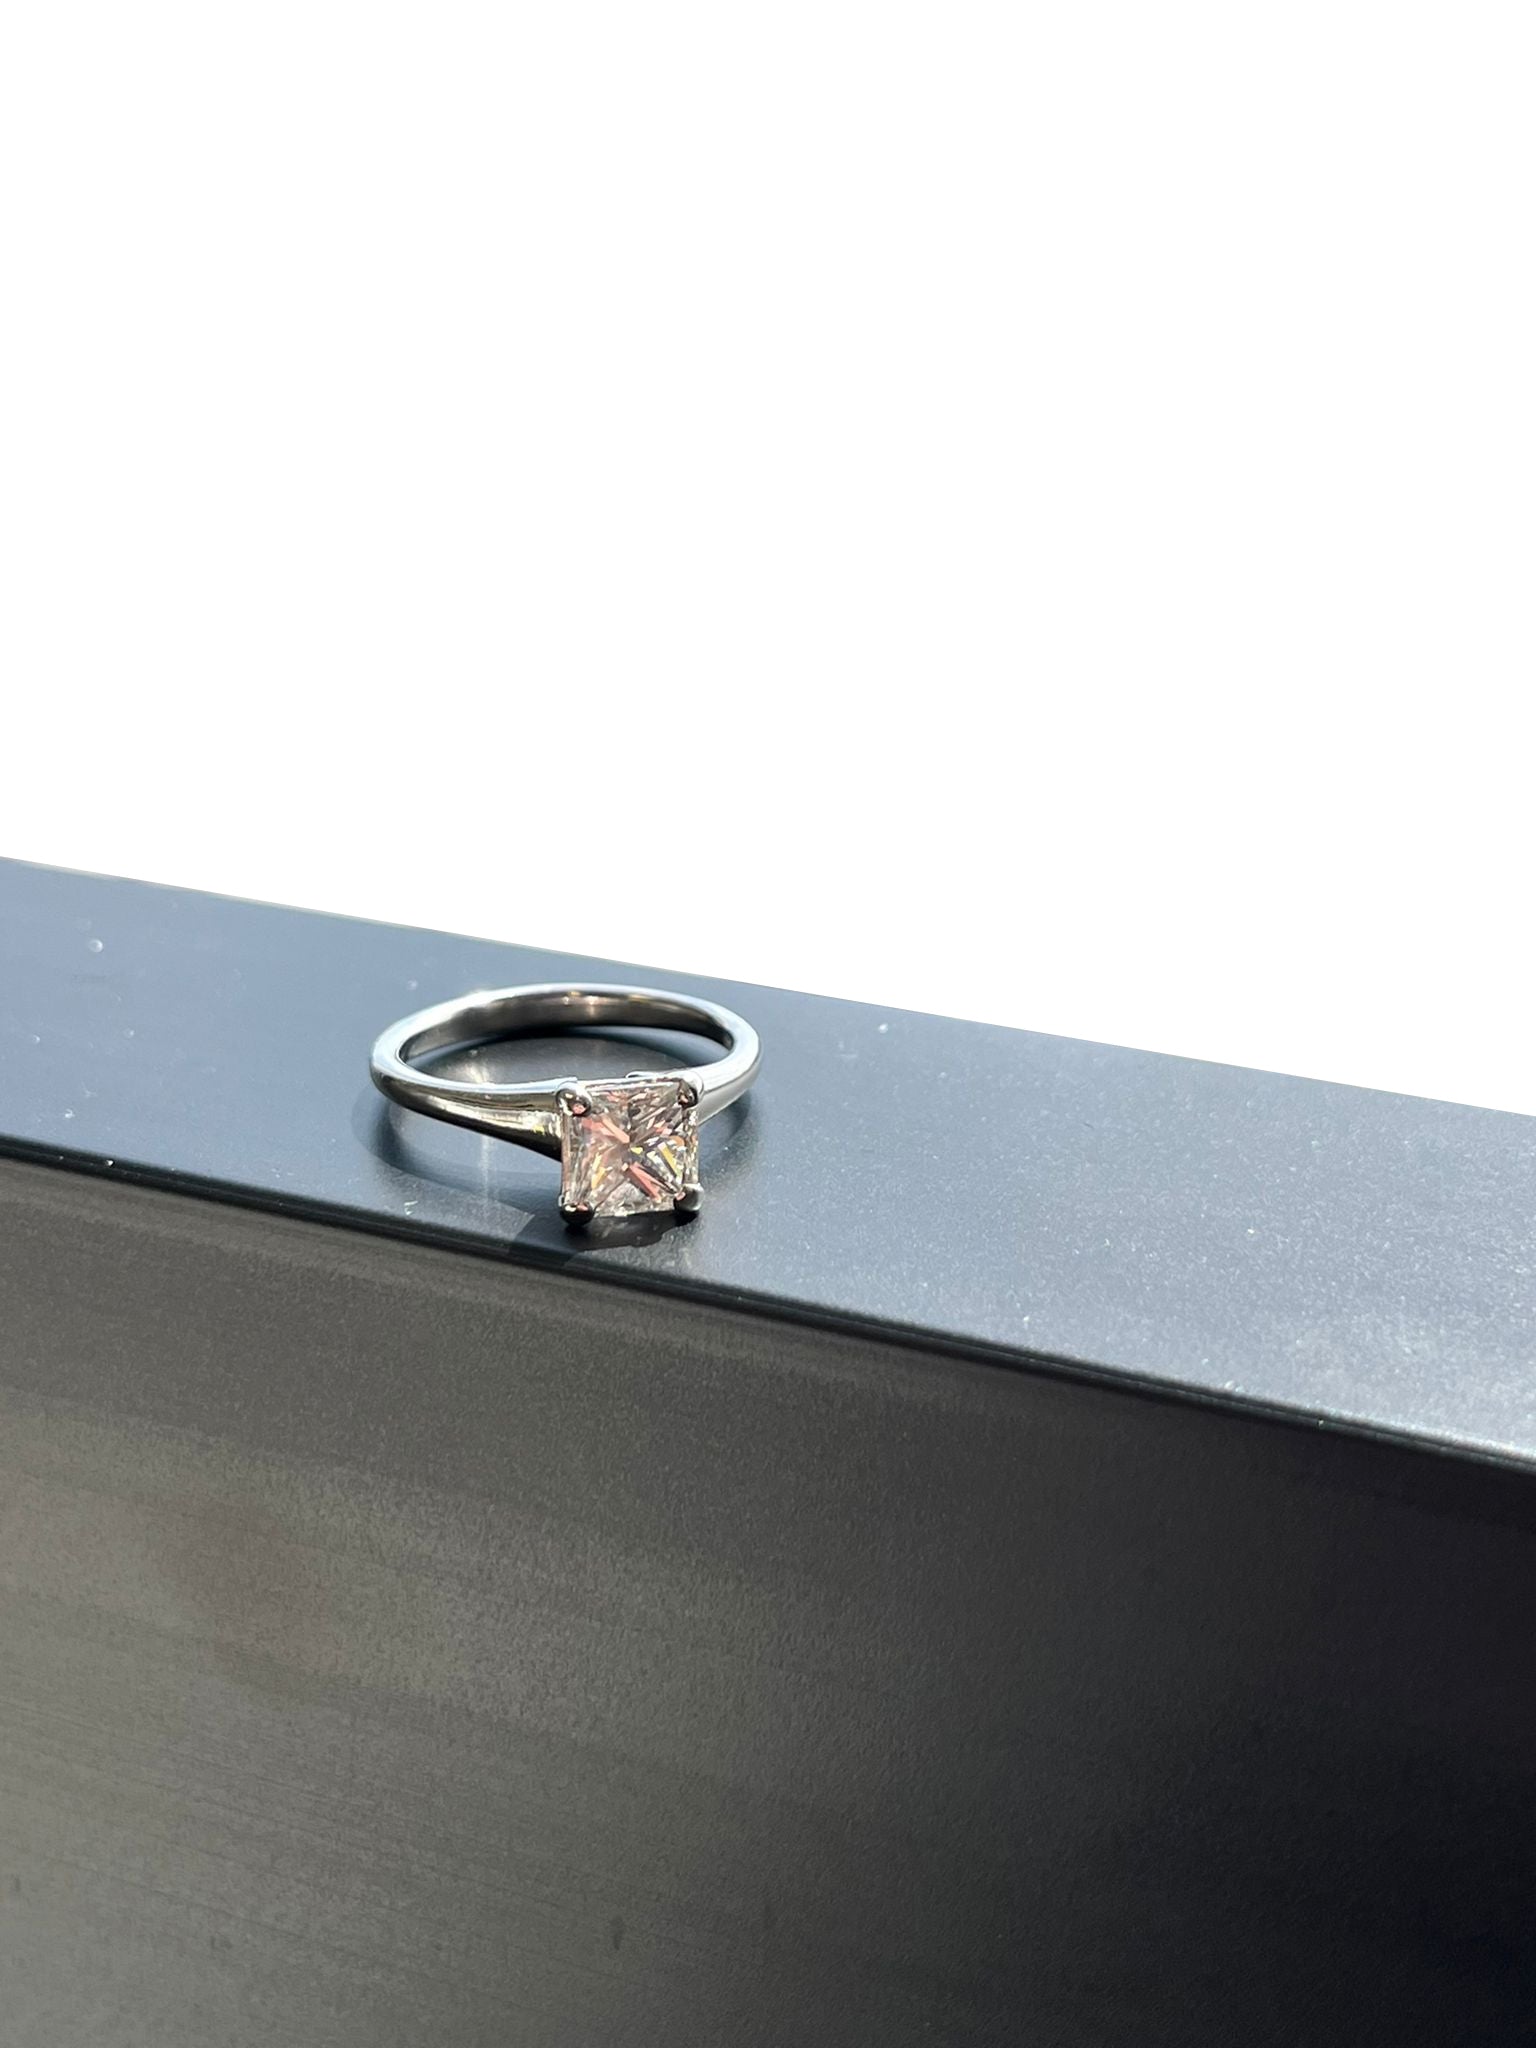 GIA 1.50ct Natural Princess Cut Diamond Engagement Ring in Platinum?VS2 Clarity